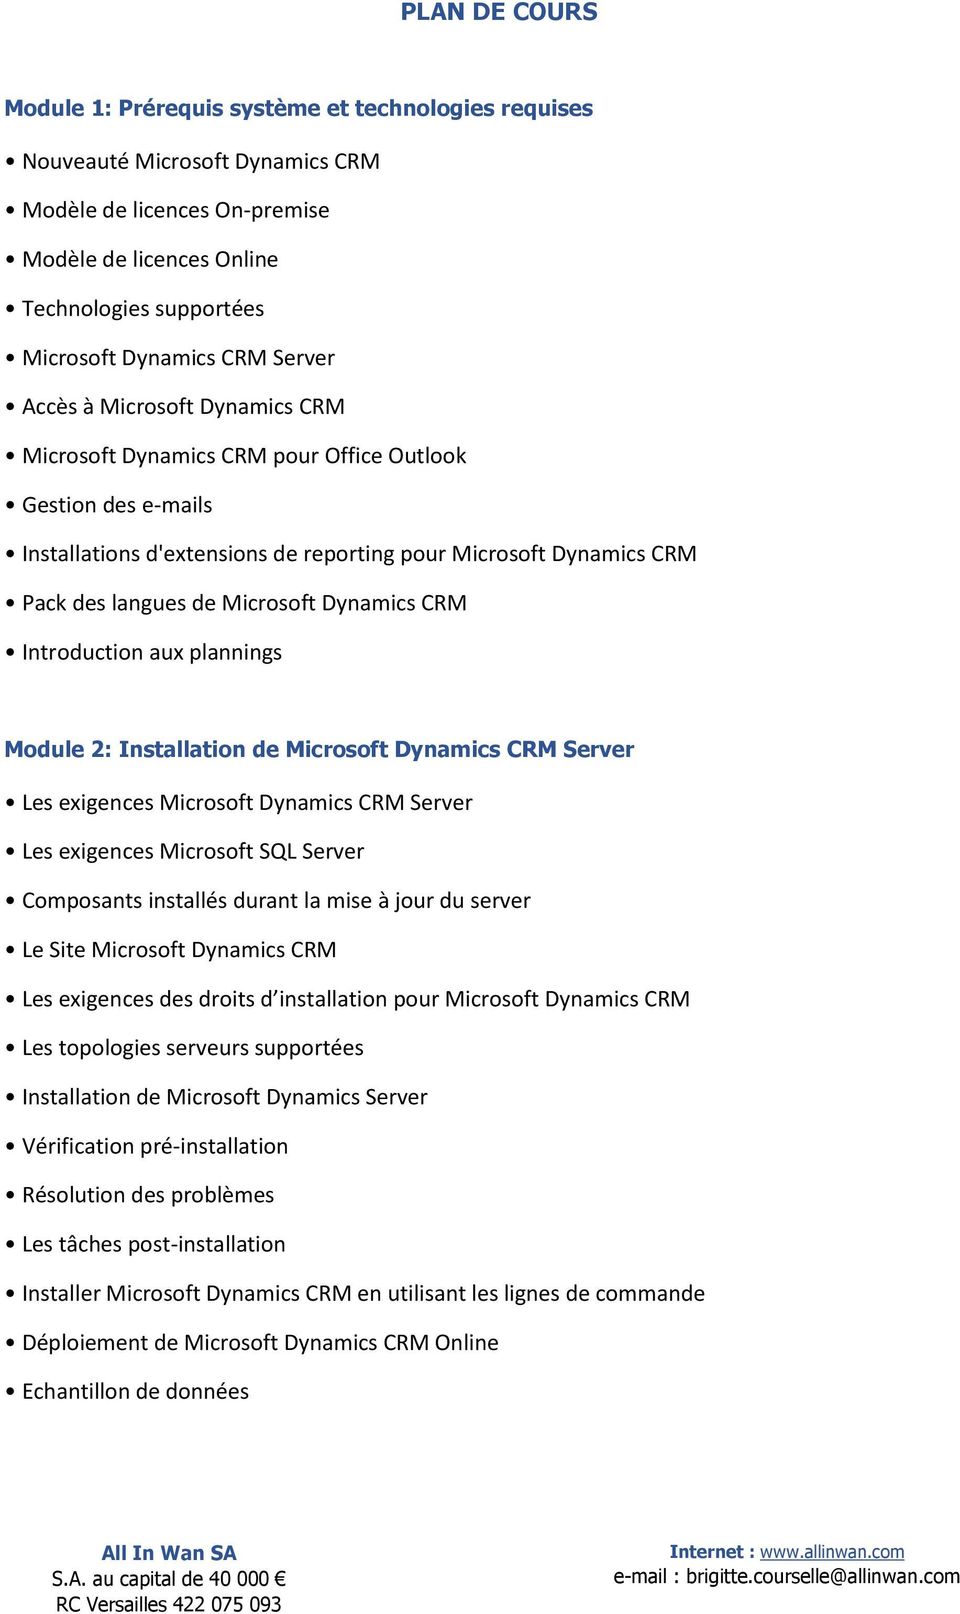 Microsoft Dynamics CRM Introduction aux plannings Module 2: Installation de Microsoft Dynamics CRM Server Les exigences Microsoft Dynamics CRM Server Les exigences Microsoft SQL Server Composants